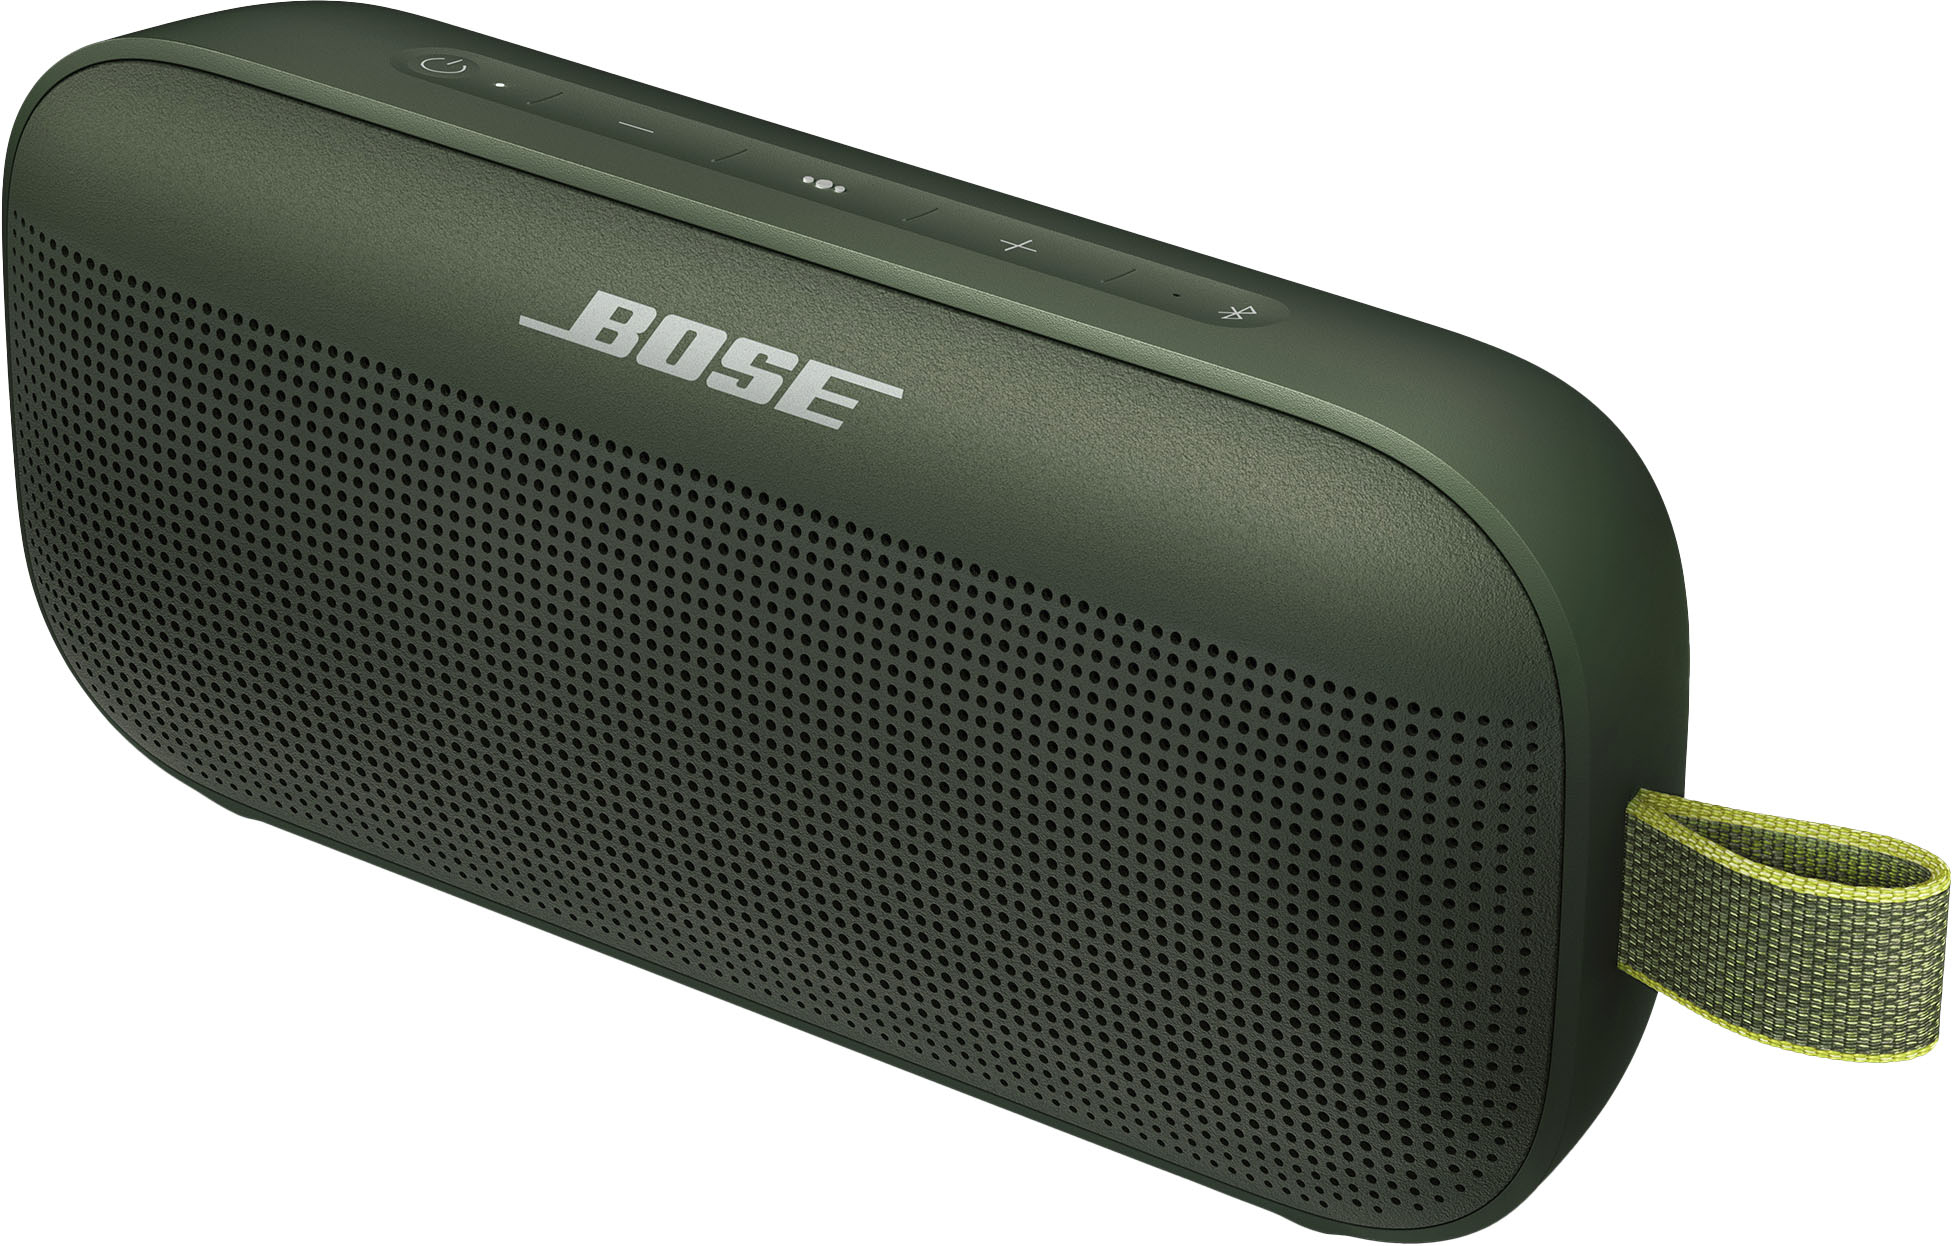 Bose SoundLink Flex Portable Bluetooth Speaker with Waterproof/Dustproof  Design Limited Edition Cypress Green 865983-0800 - Best Buy